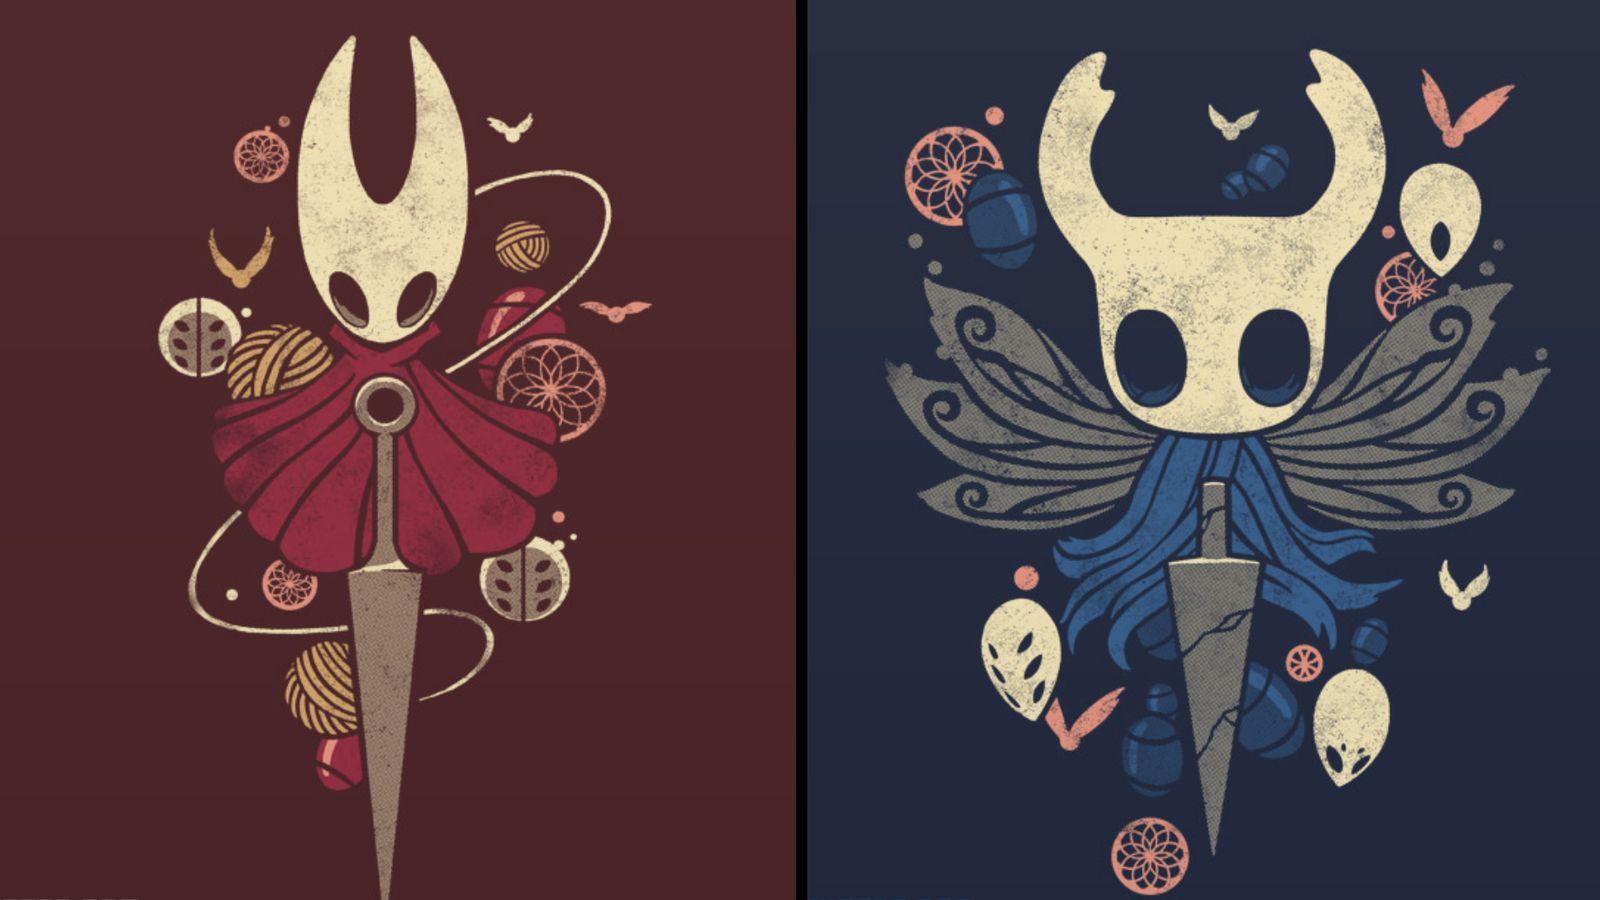 Hollow Knight and Hornet. Art. Knight, Knight art, Hollow